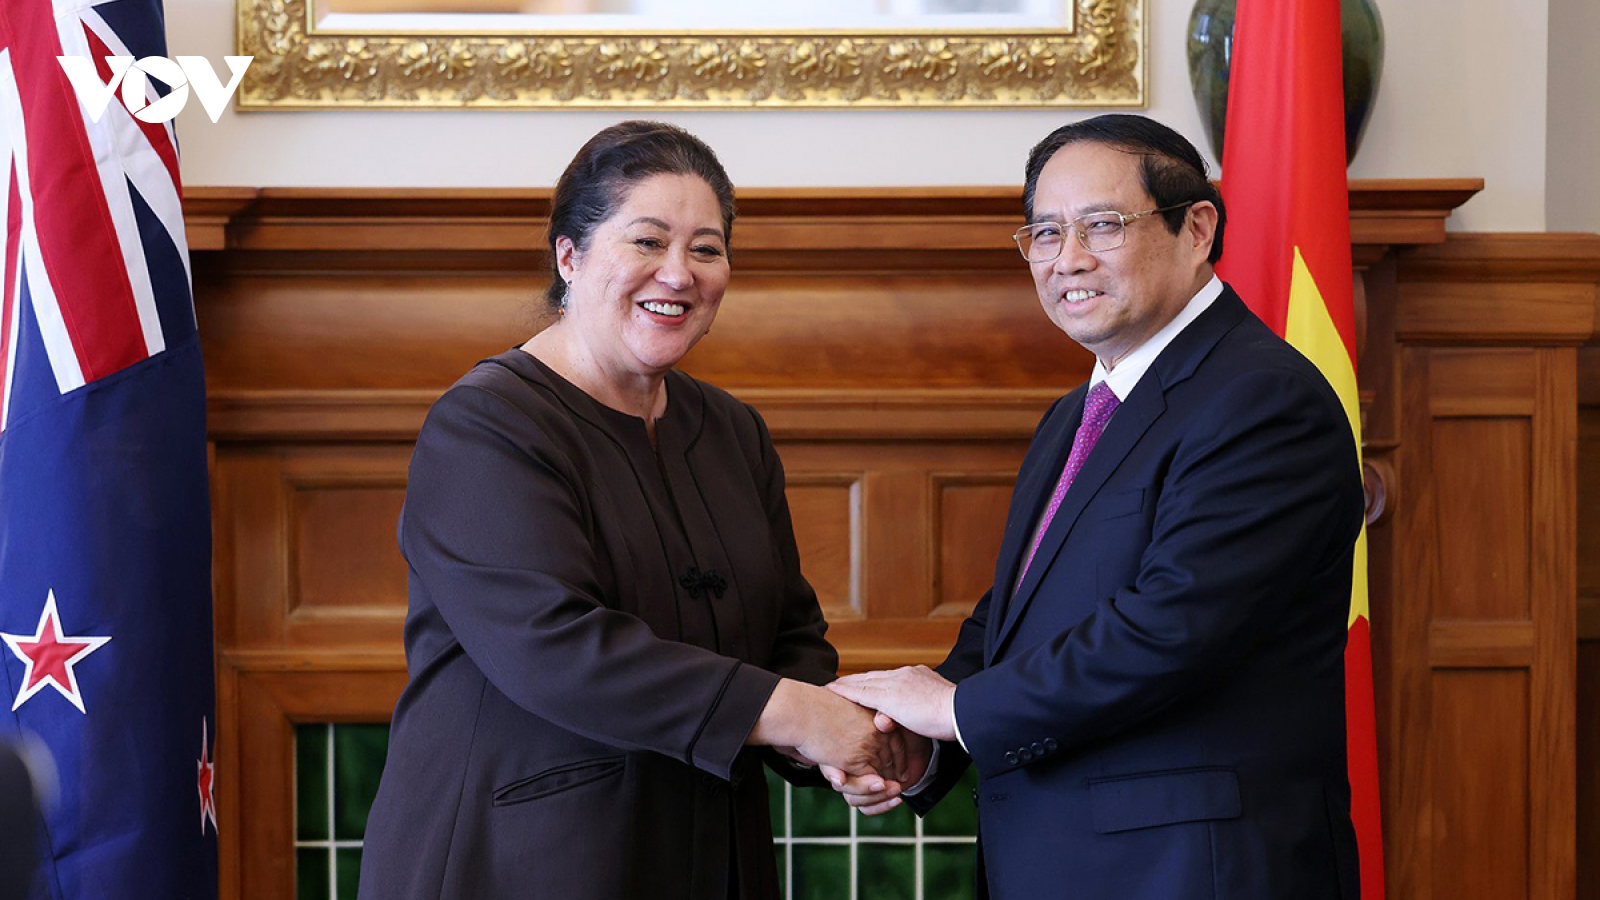 New Zealand considers Vietnam an important partner regionally